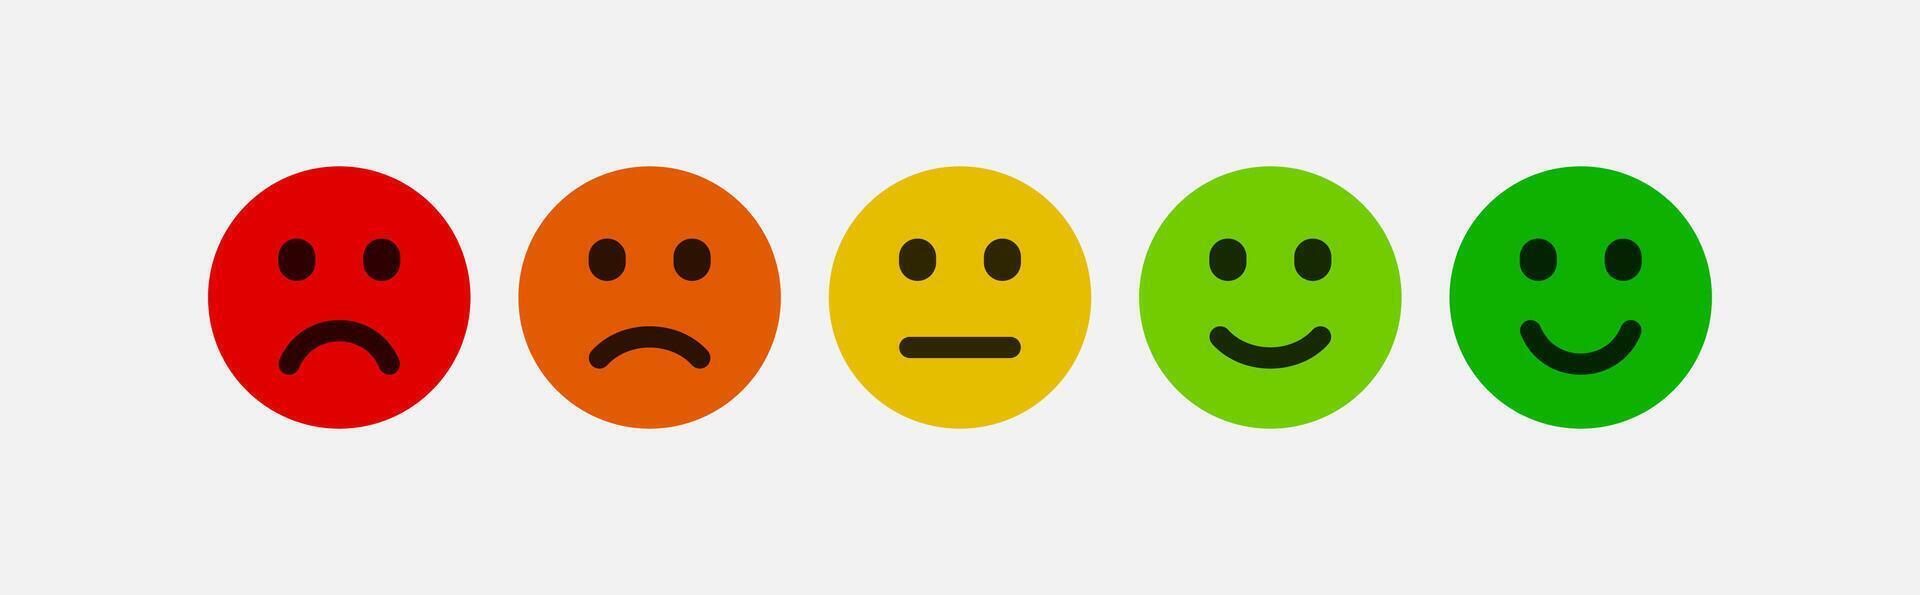 Emotional Mood scale emoji. Customer Satisfaction Indicator Emoticons Isolated Vector. vector